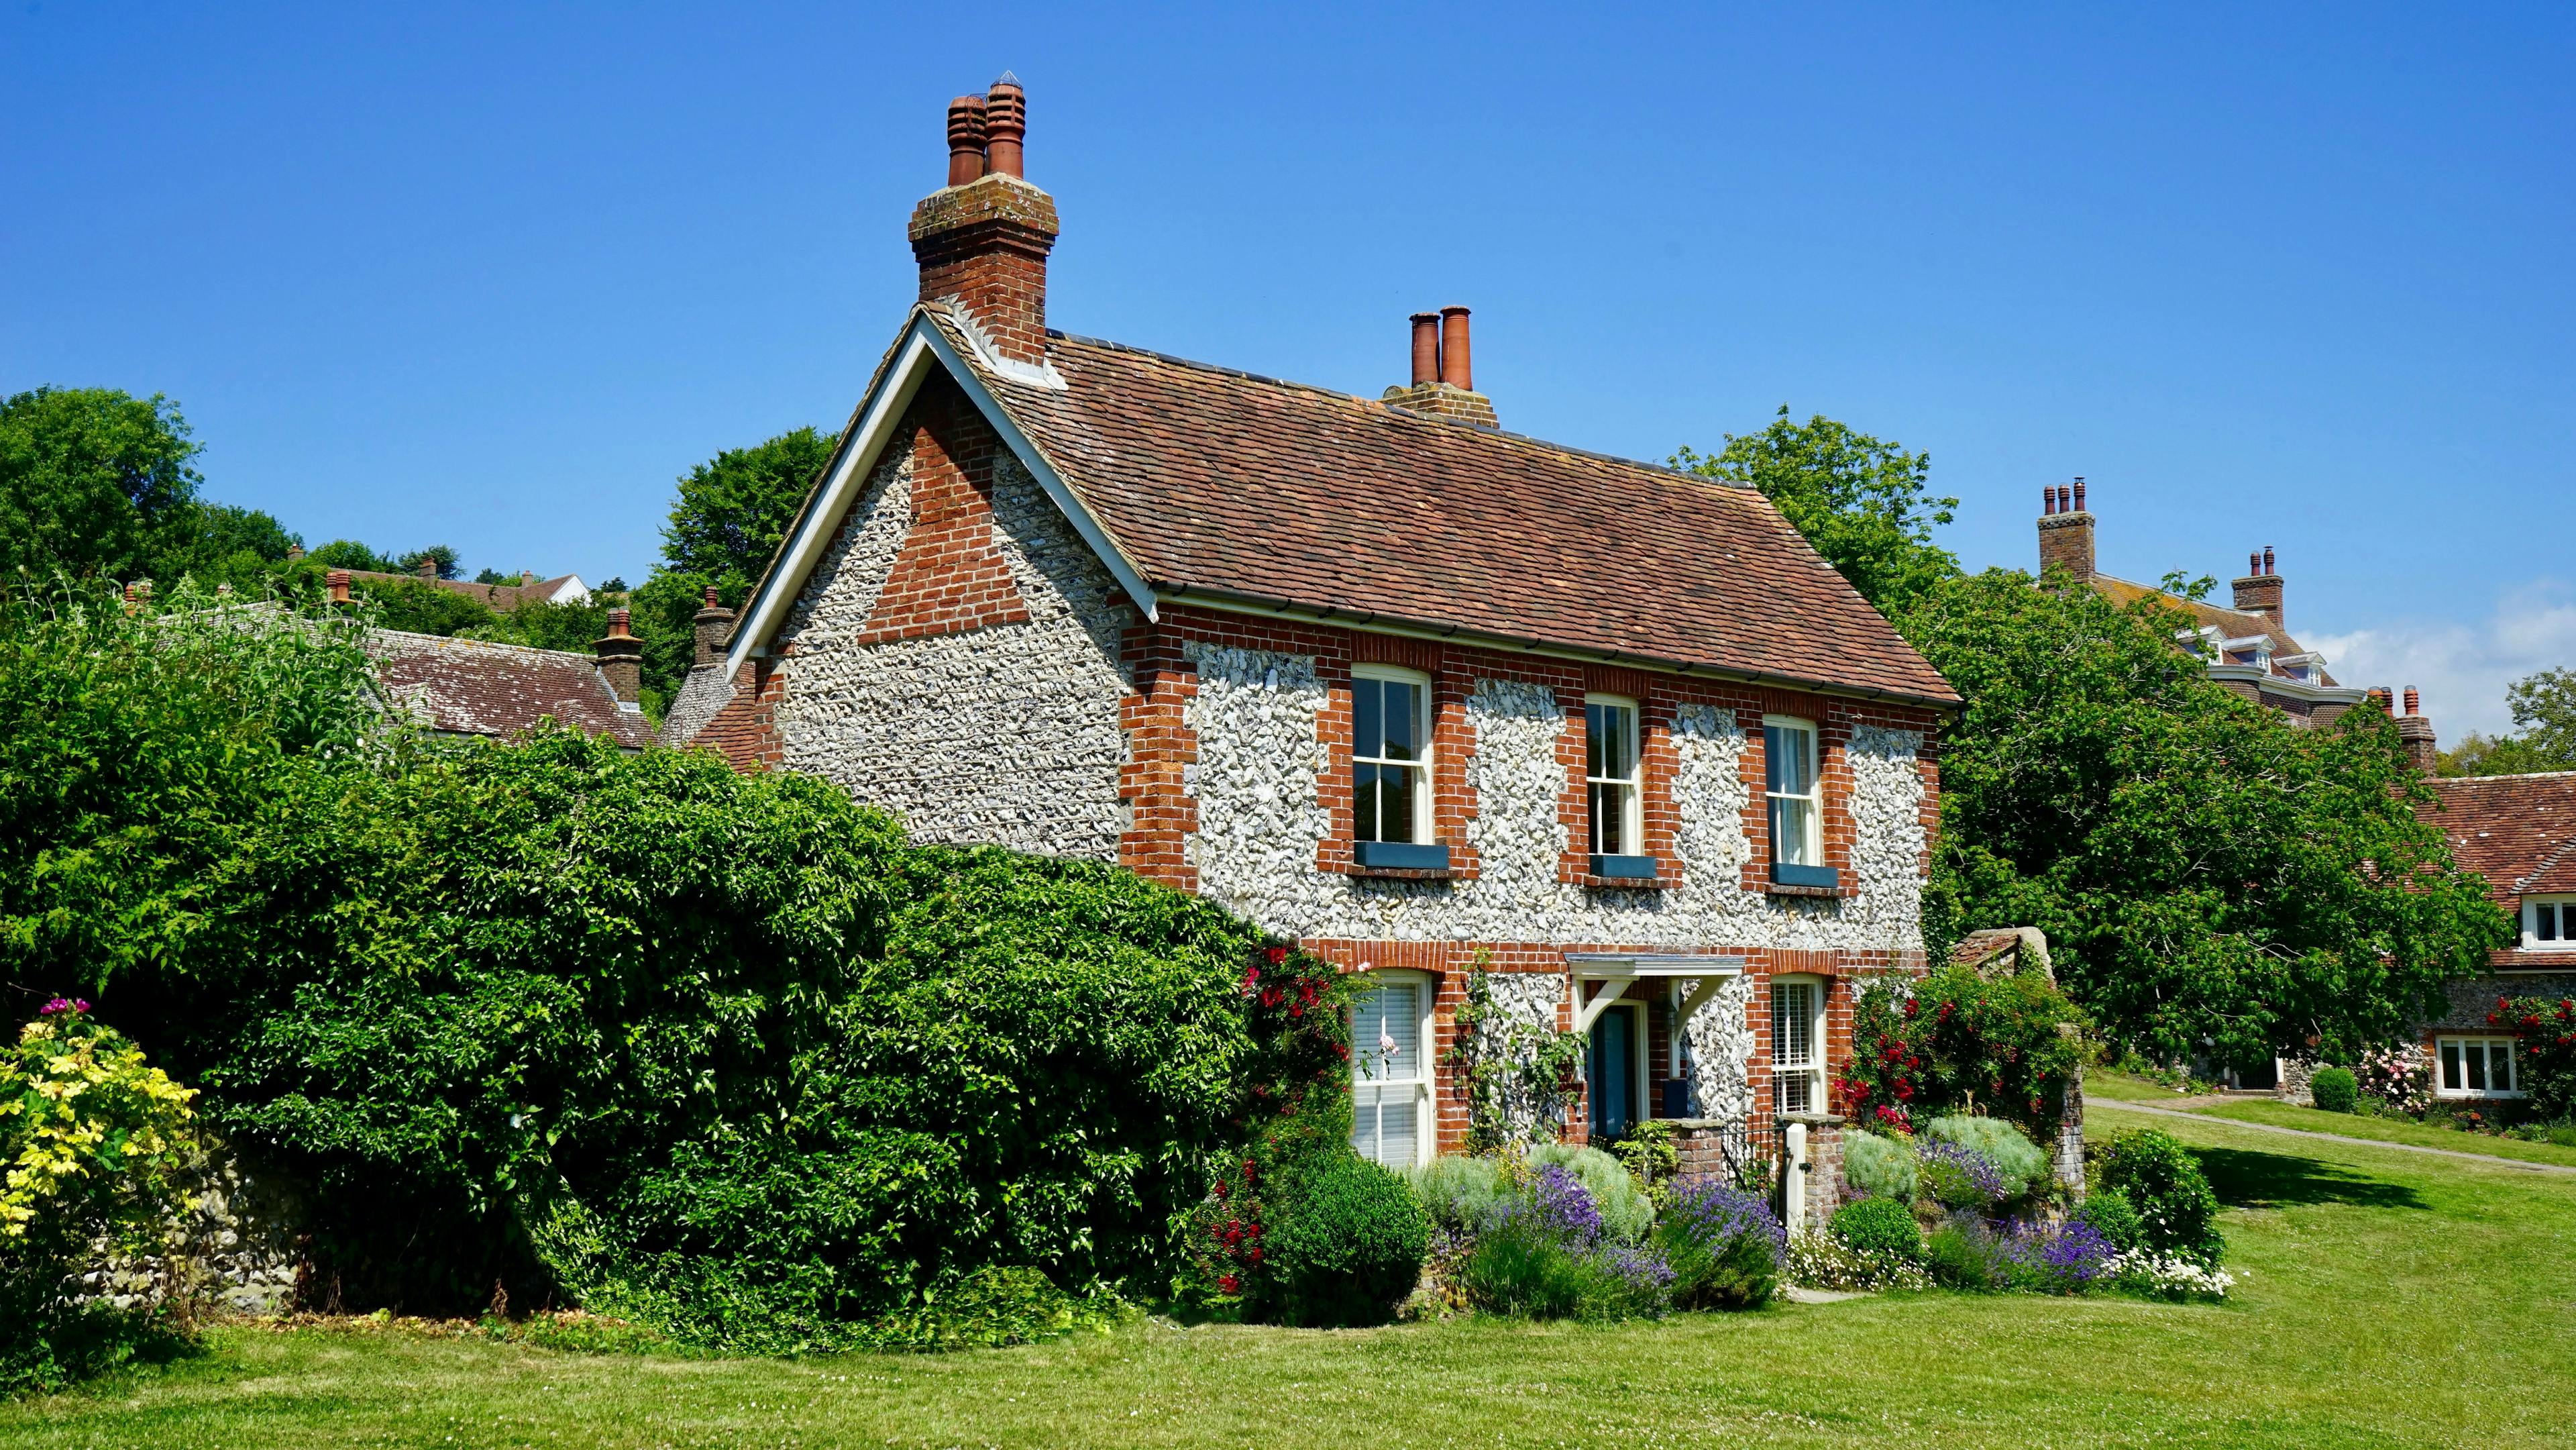 Grade listed house